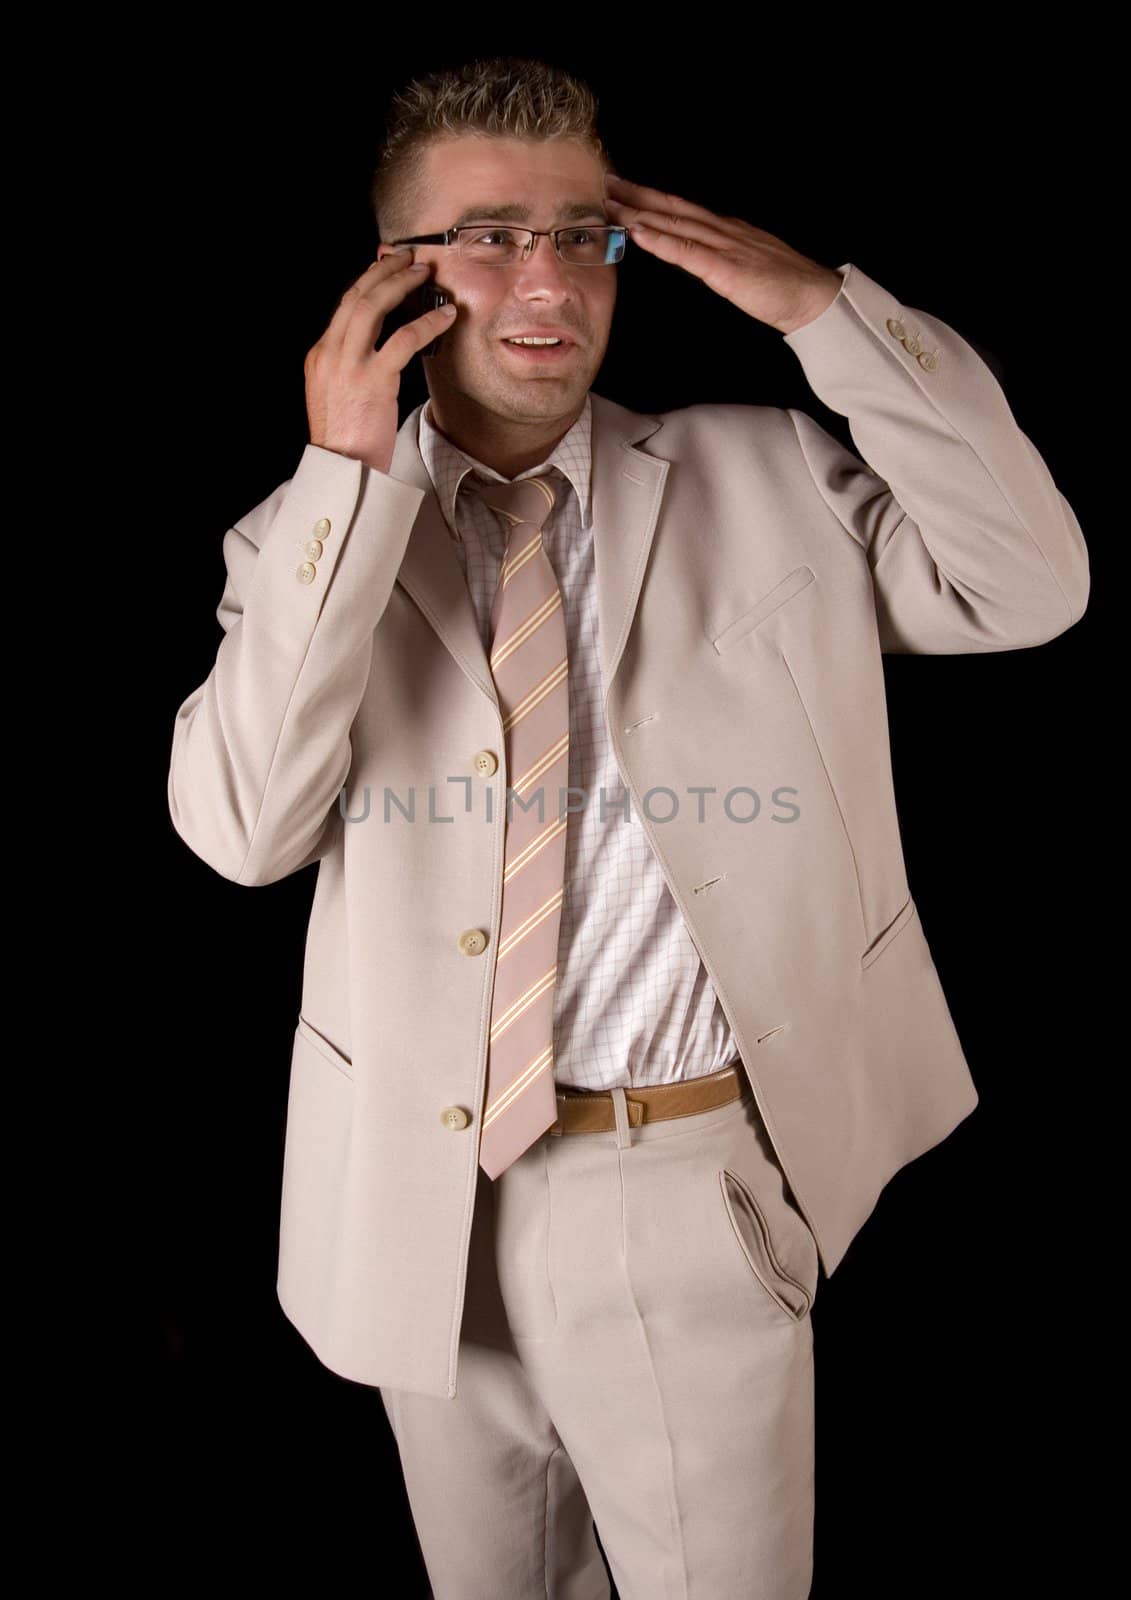 Businessman talking on mobile phone